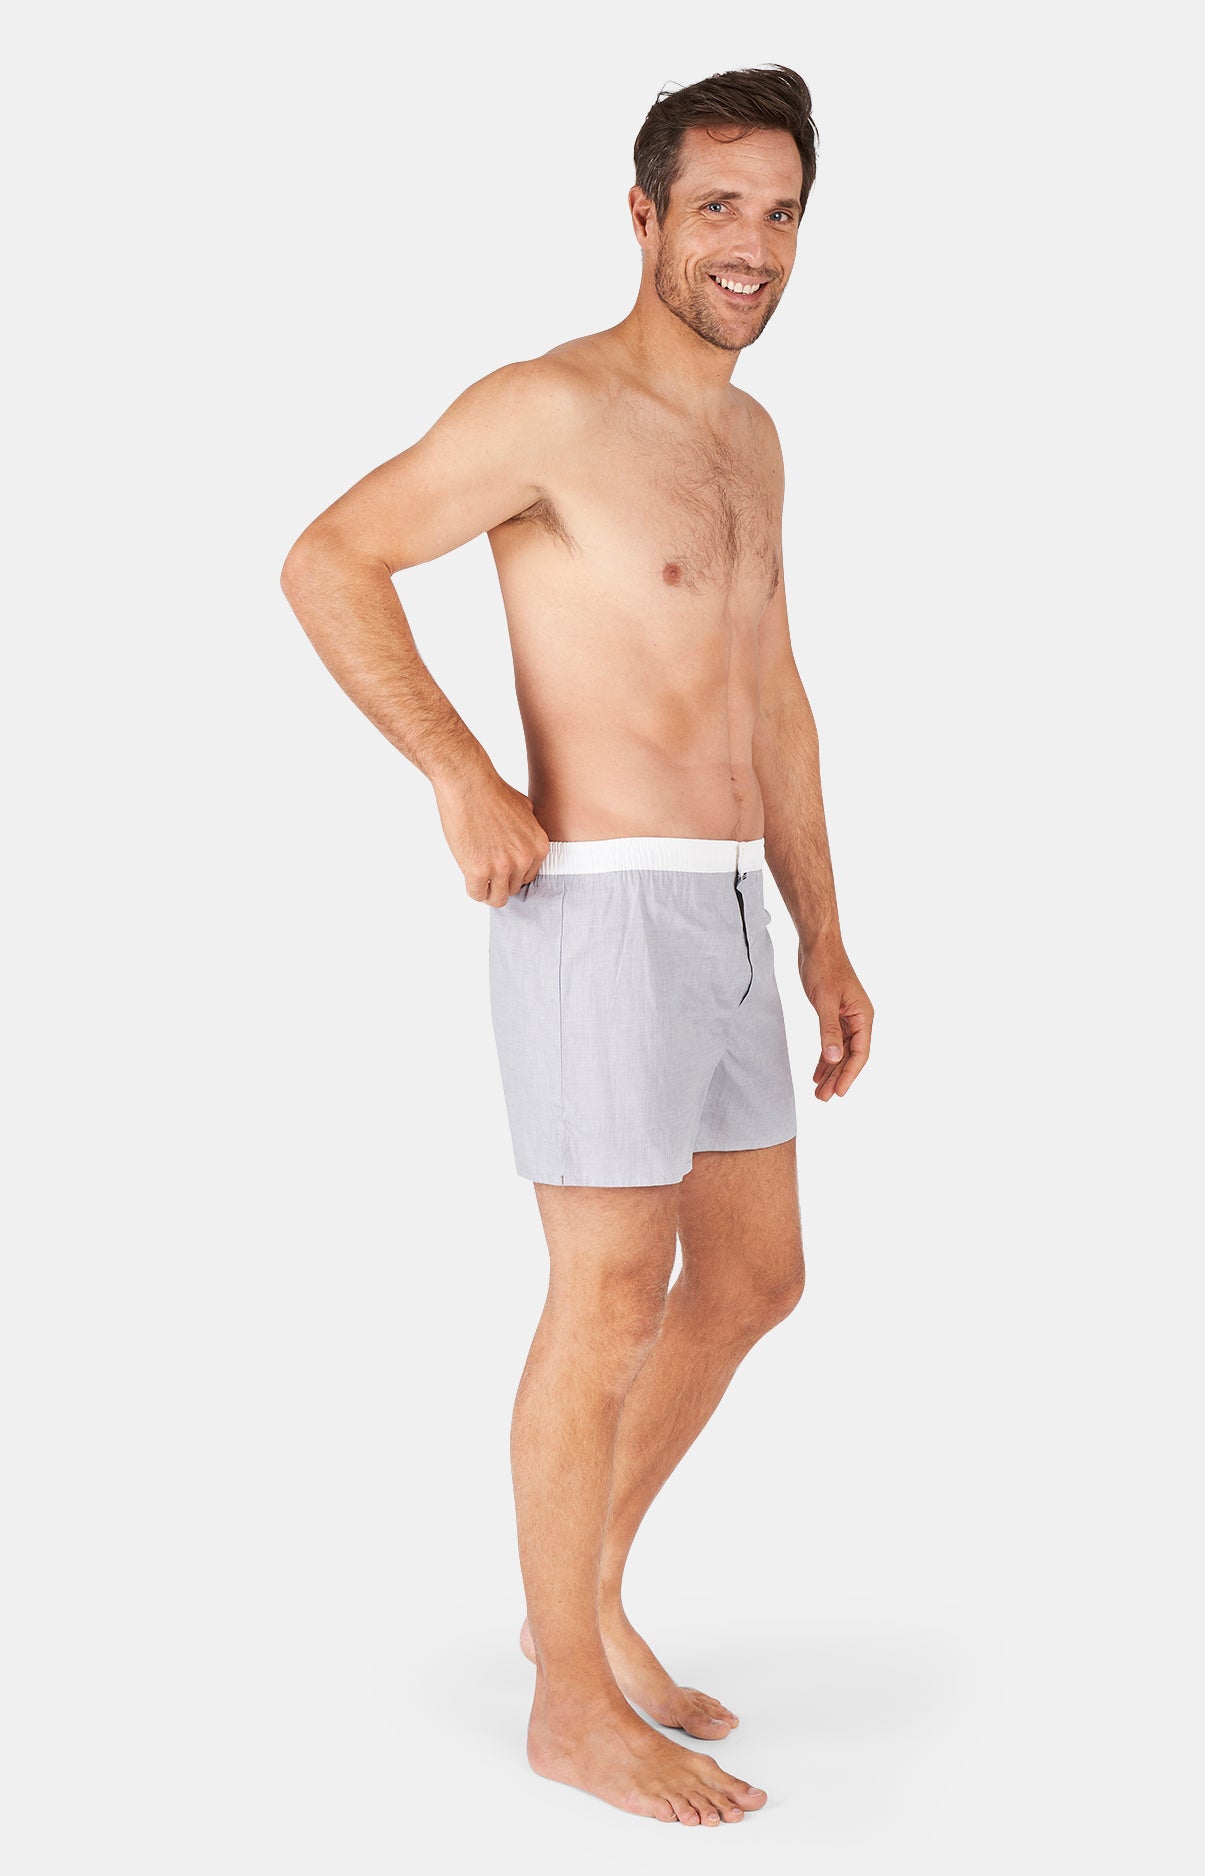 Boxer shorts with jockstrap - Le Club n°007